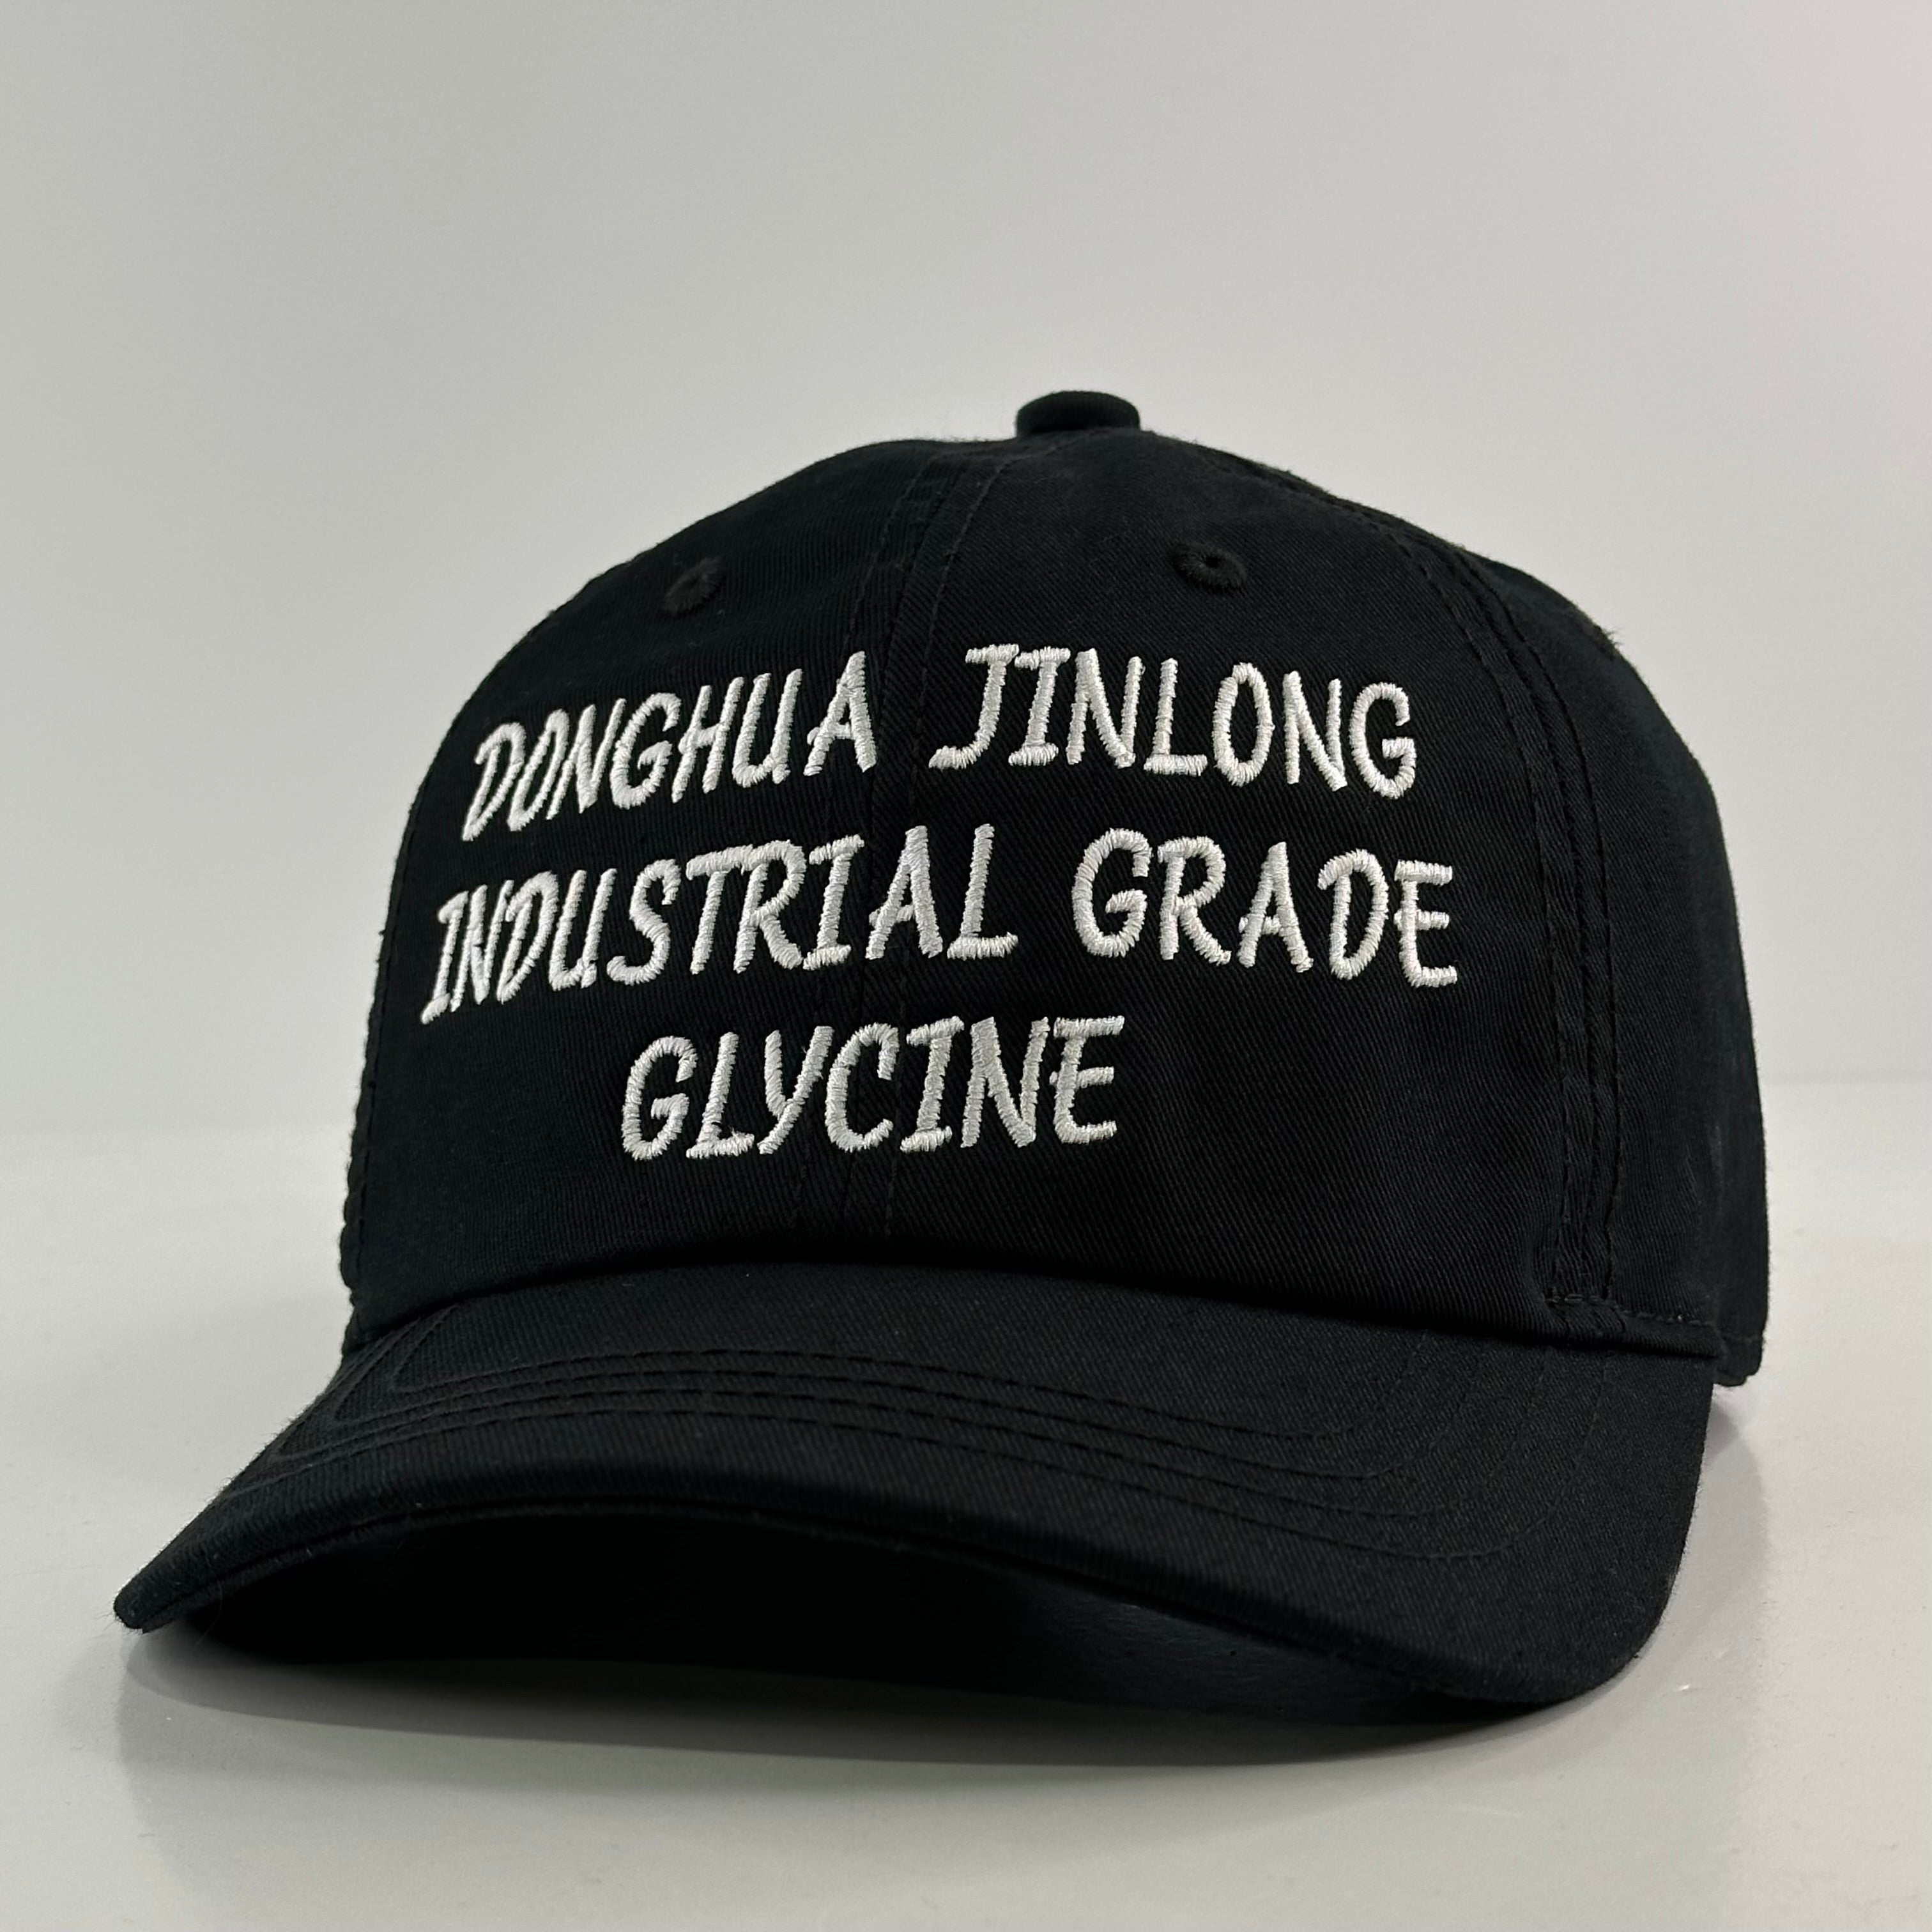 DONGHUA JINLONG INDUSTRIAL GRADE GLYCINE Dad Hat Custom